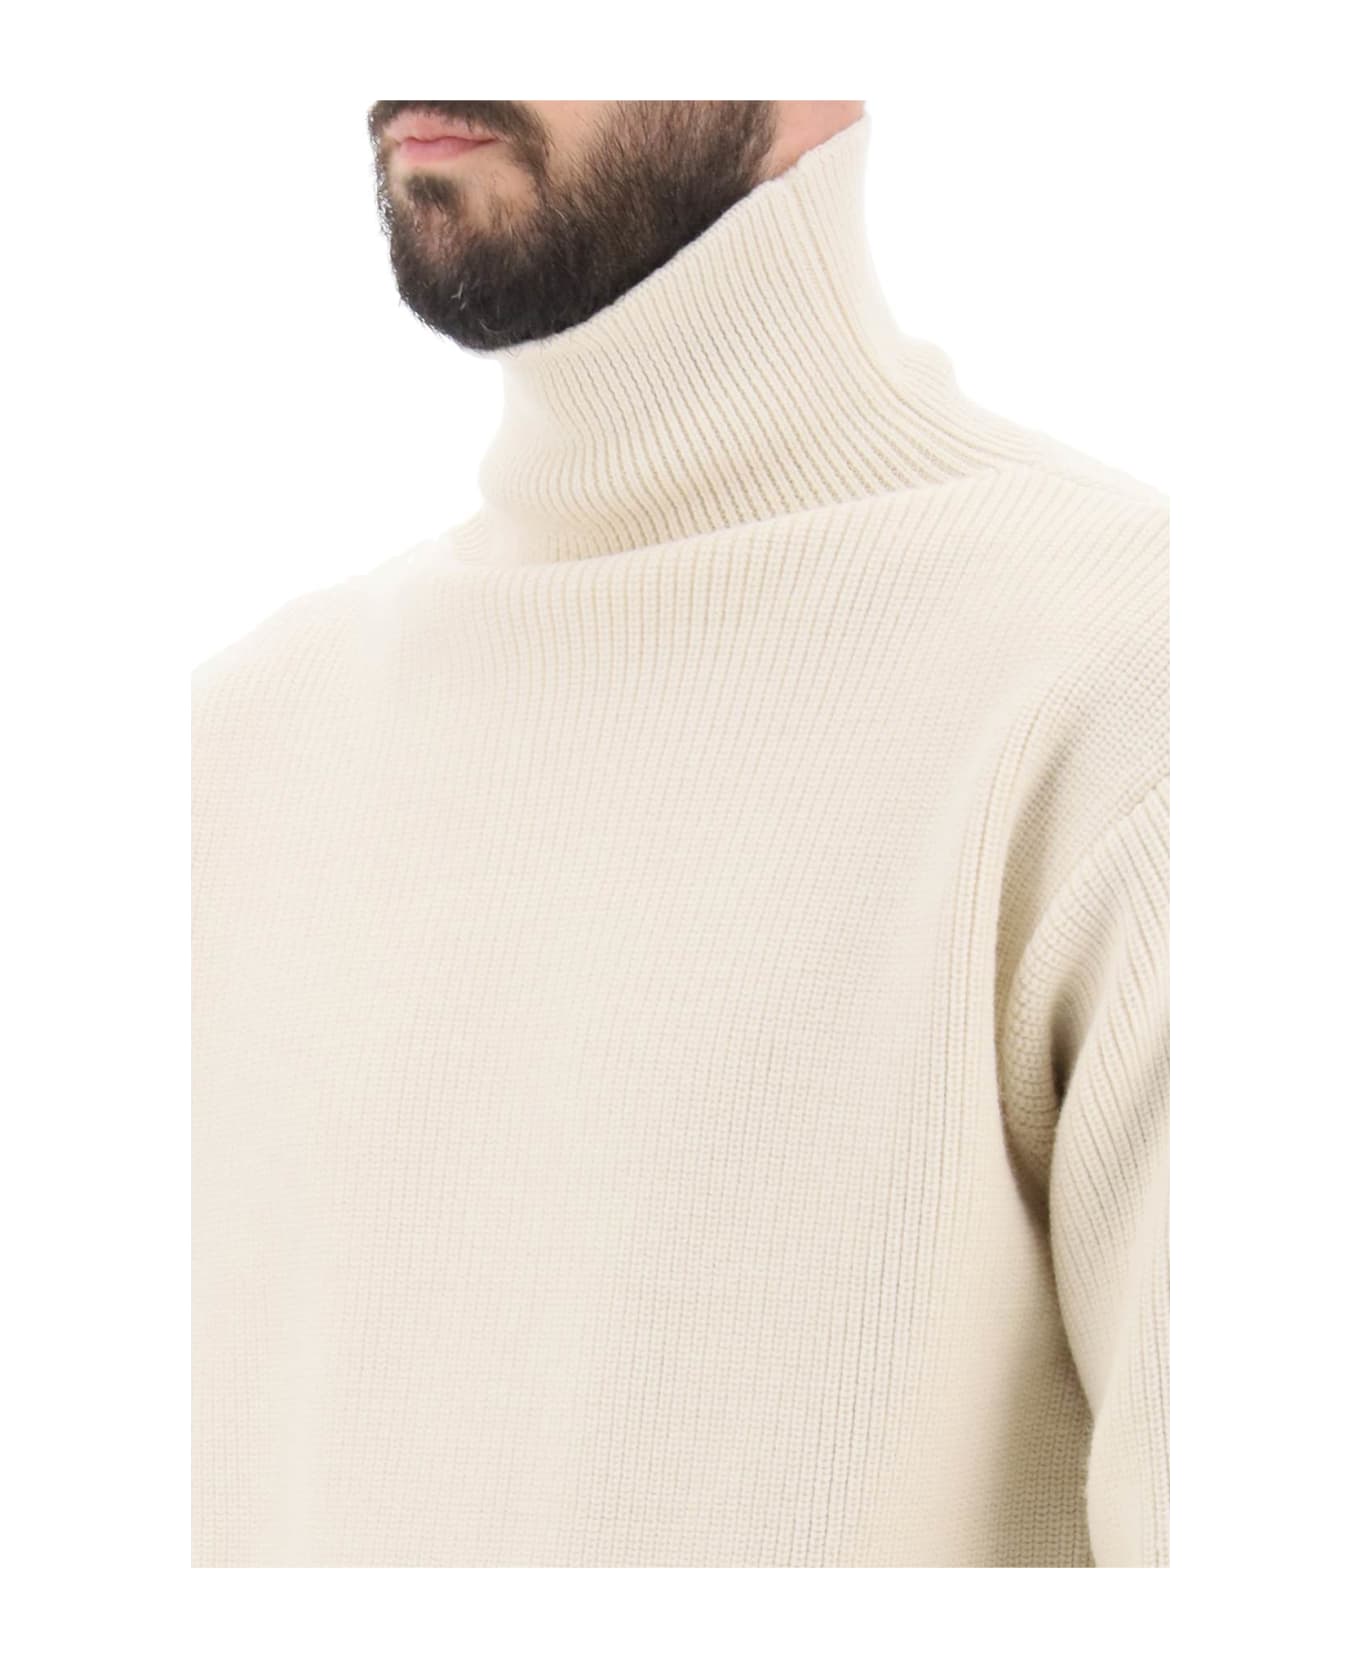 Jil Sander Side Zip High Neck Sweater - NATURAL (White)